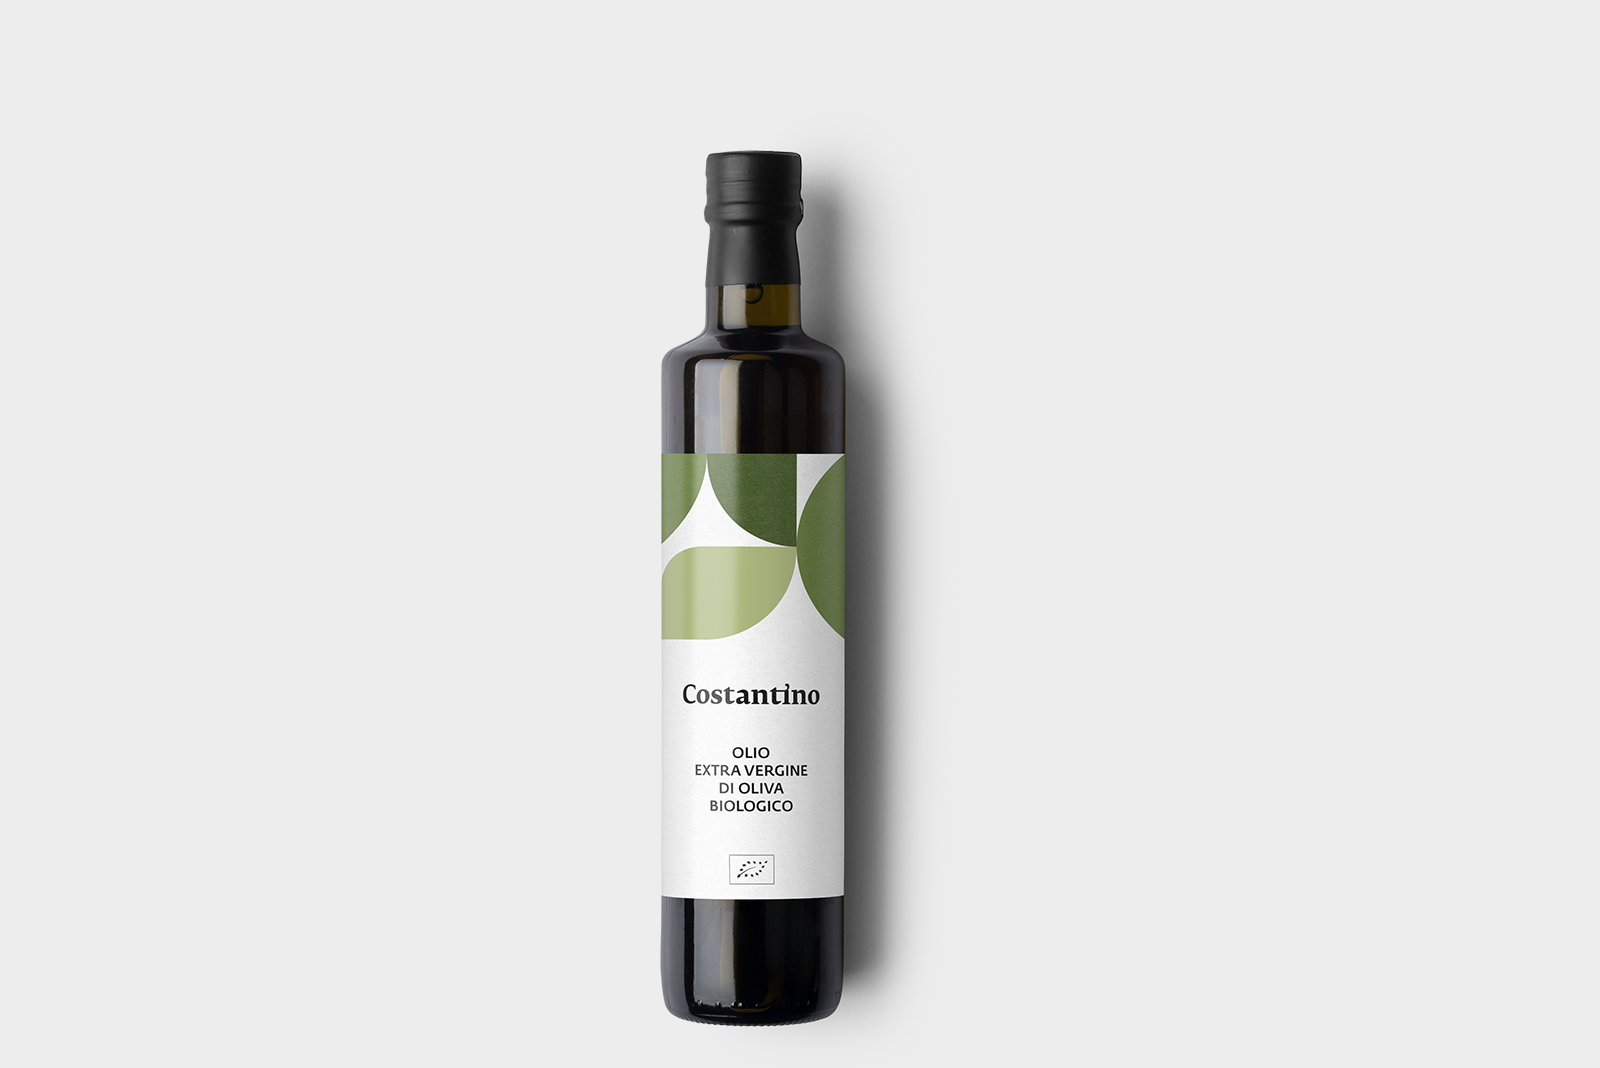 Costantino - Olio Extra Vergine d’Oliva Biologico - bottiglia 75cl